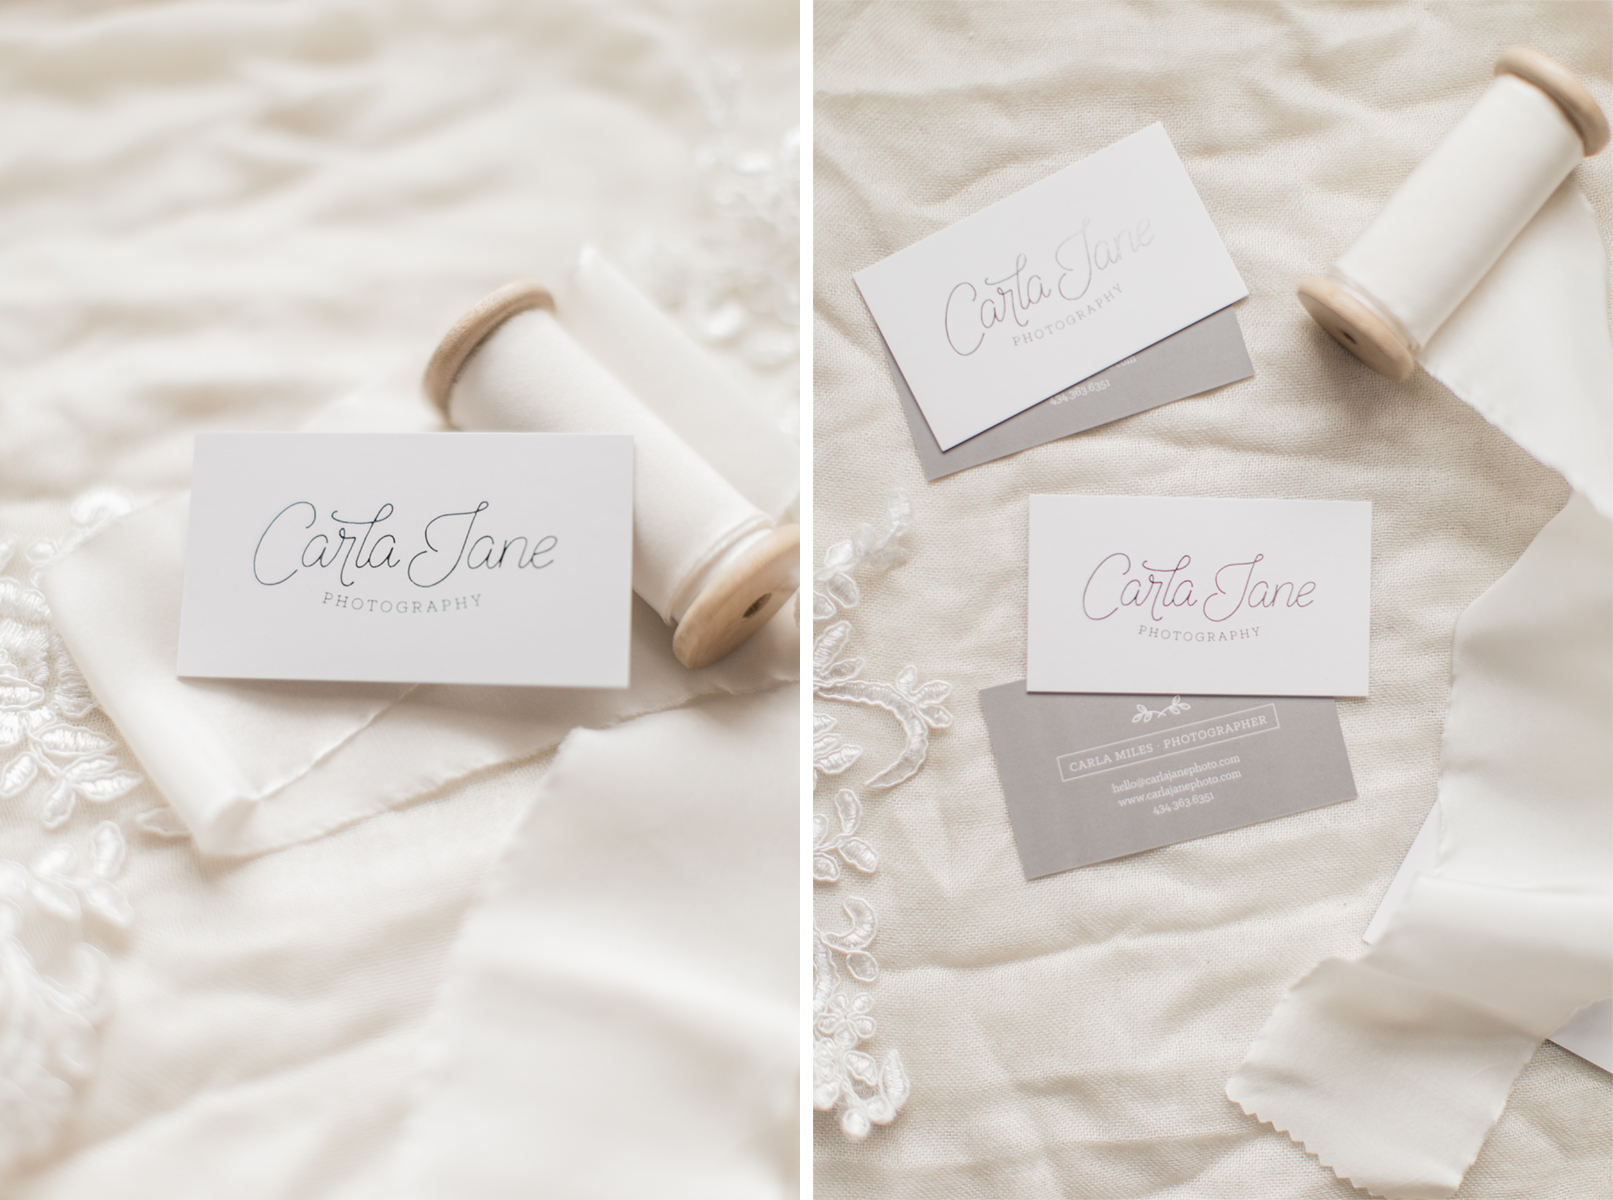 Carla Jane Photography | Hand Lettered Branding | Nashville Wedding Photographer